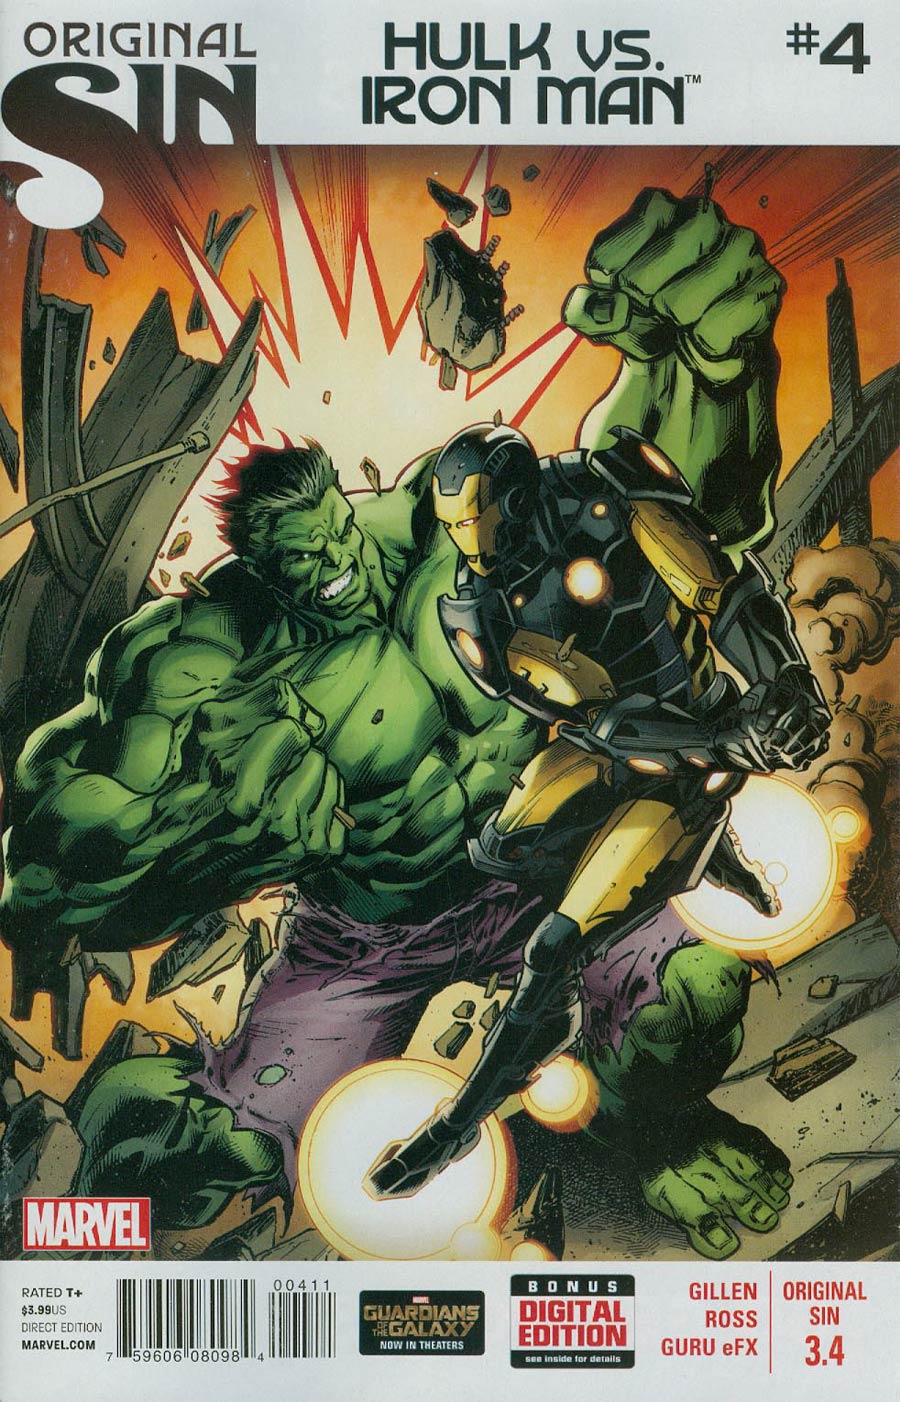 Original Sin #3.4 Hulk vs Iron Man Part 4